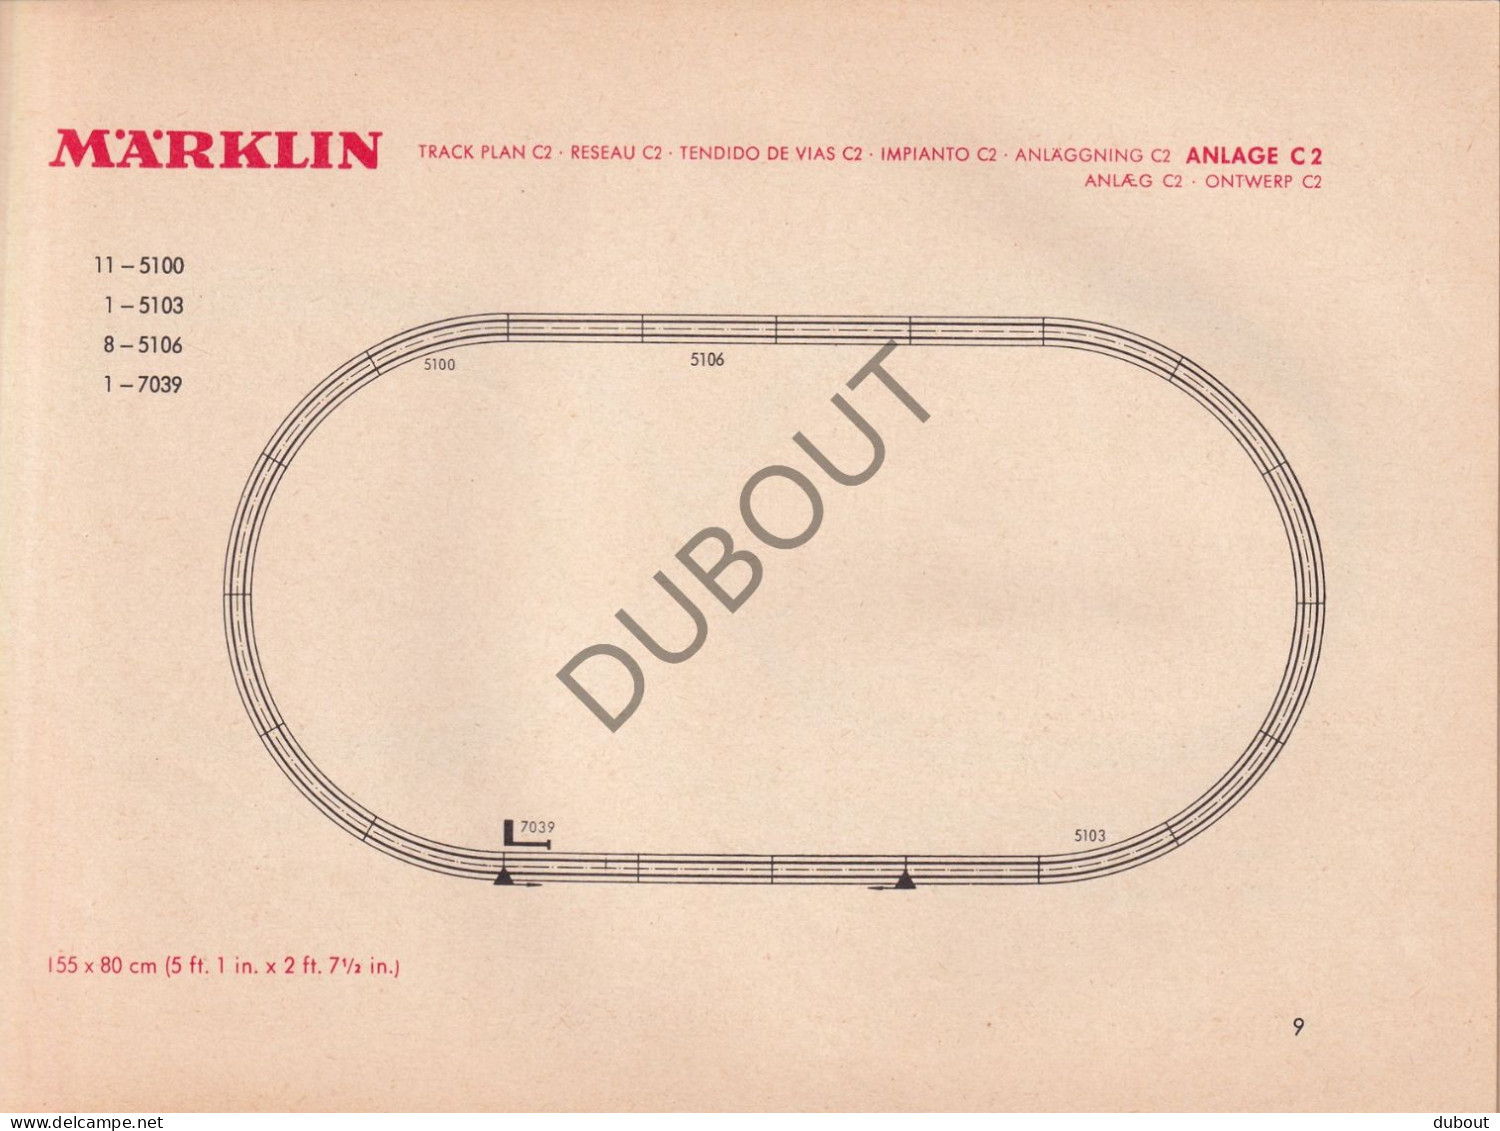 Marklin Cataloog 1965  (V3020) - Catalogues